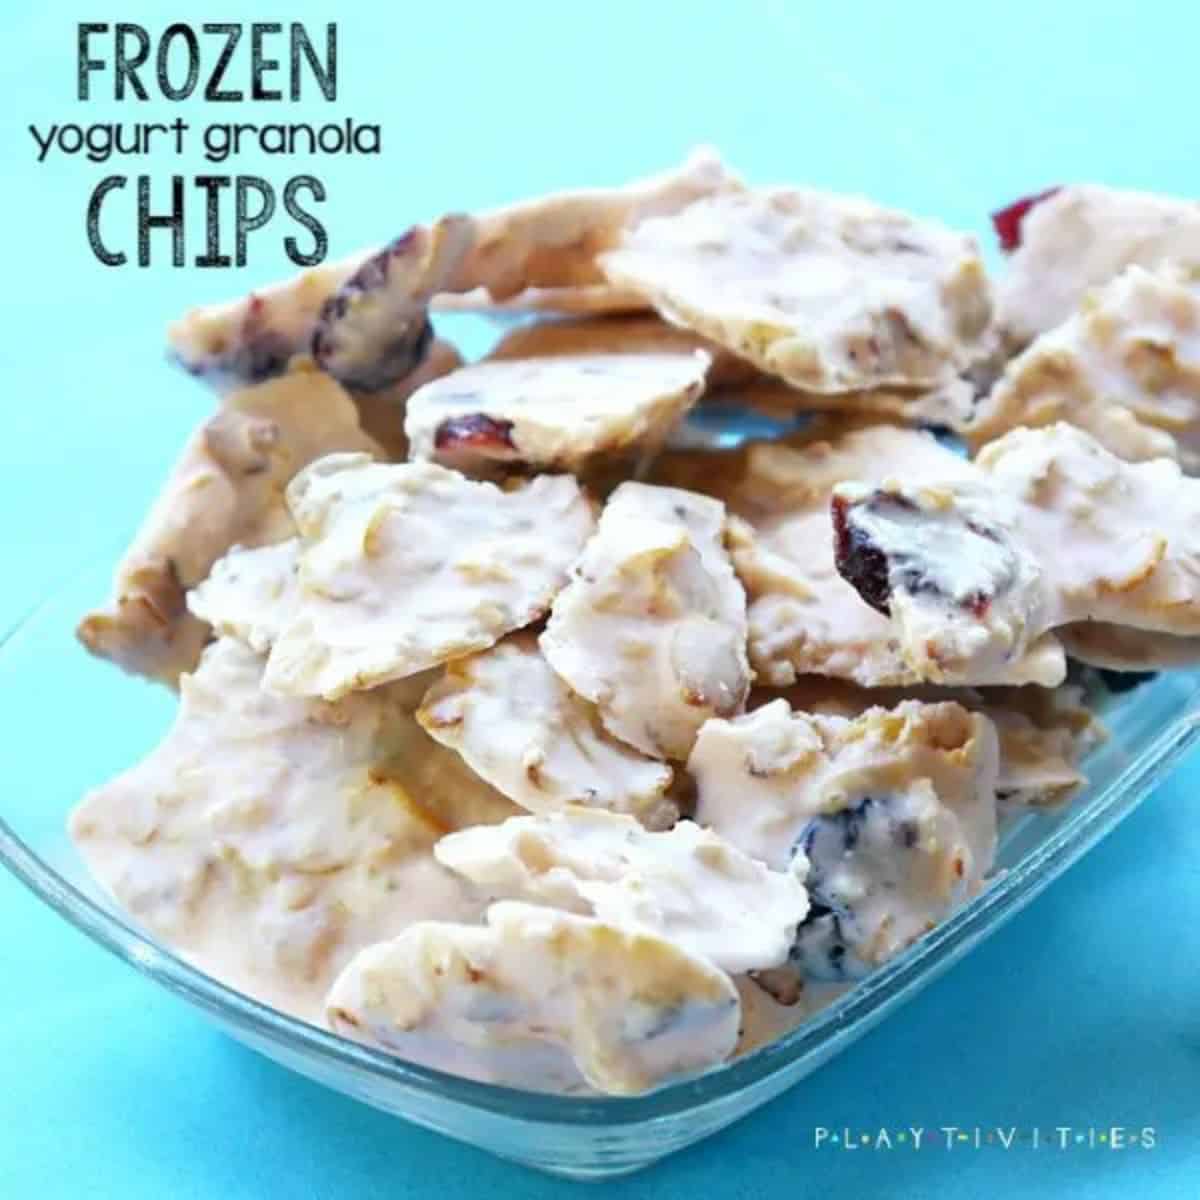 Frozen yogurt granula chips in a glass bowl.